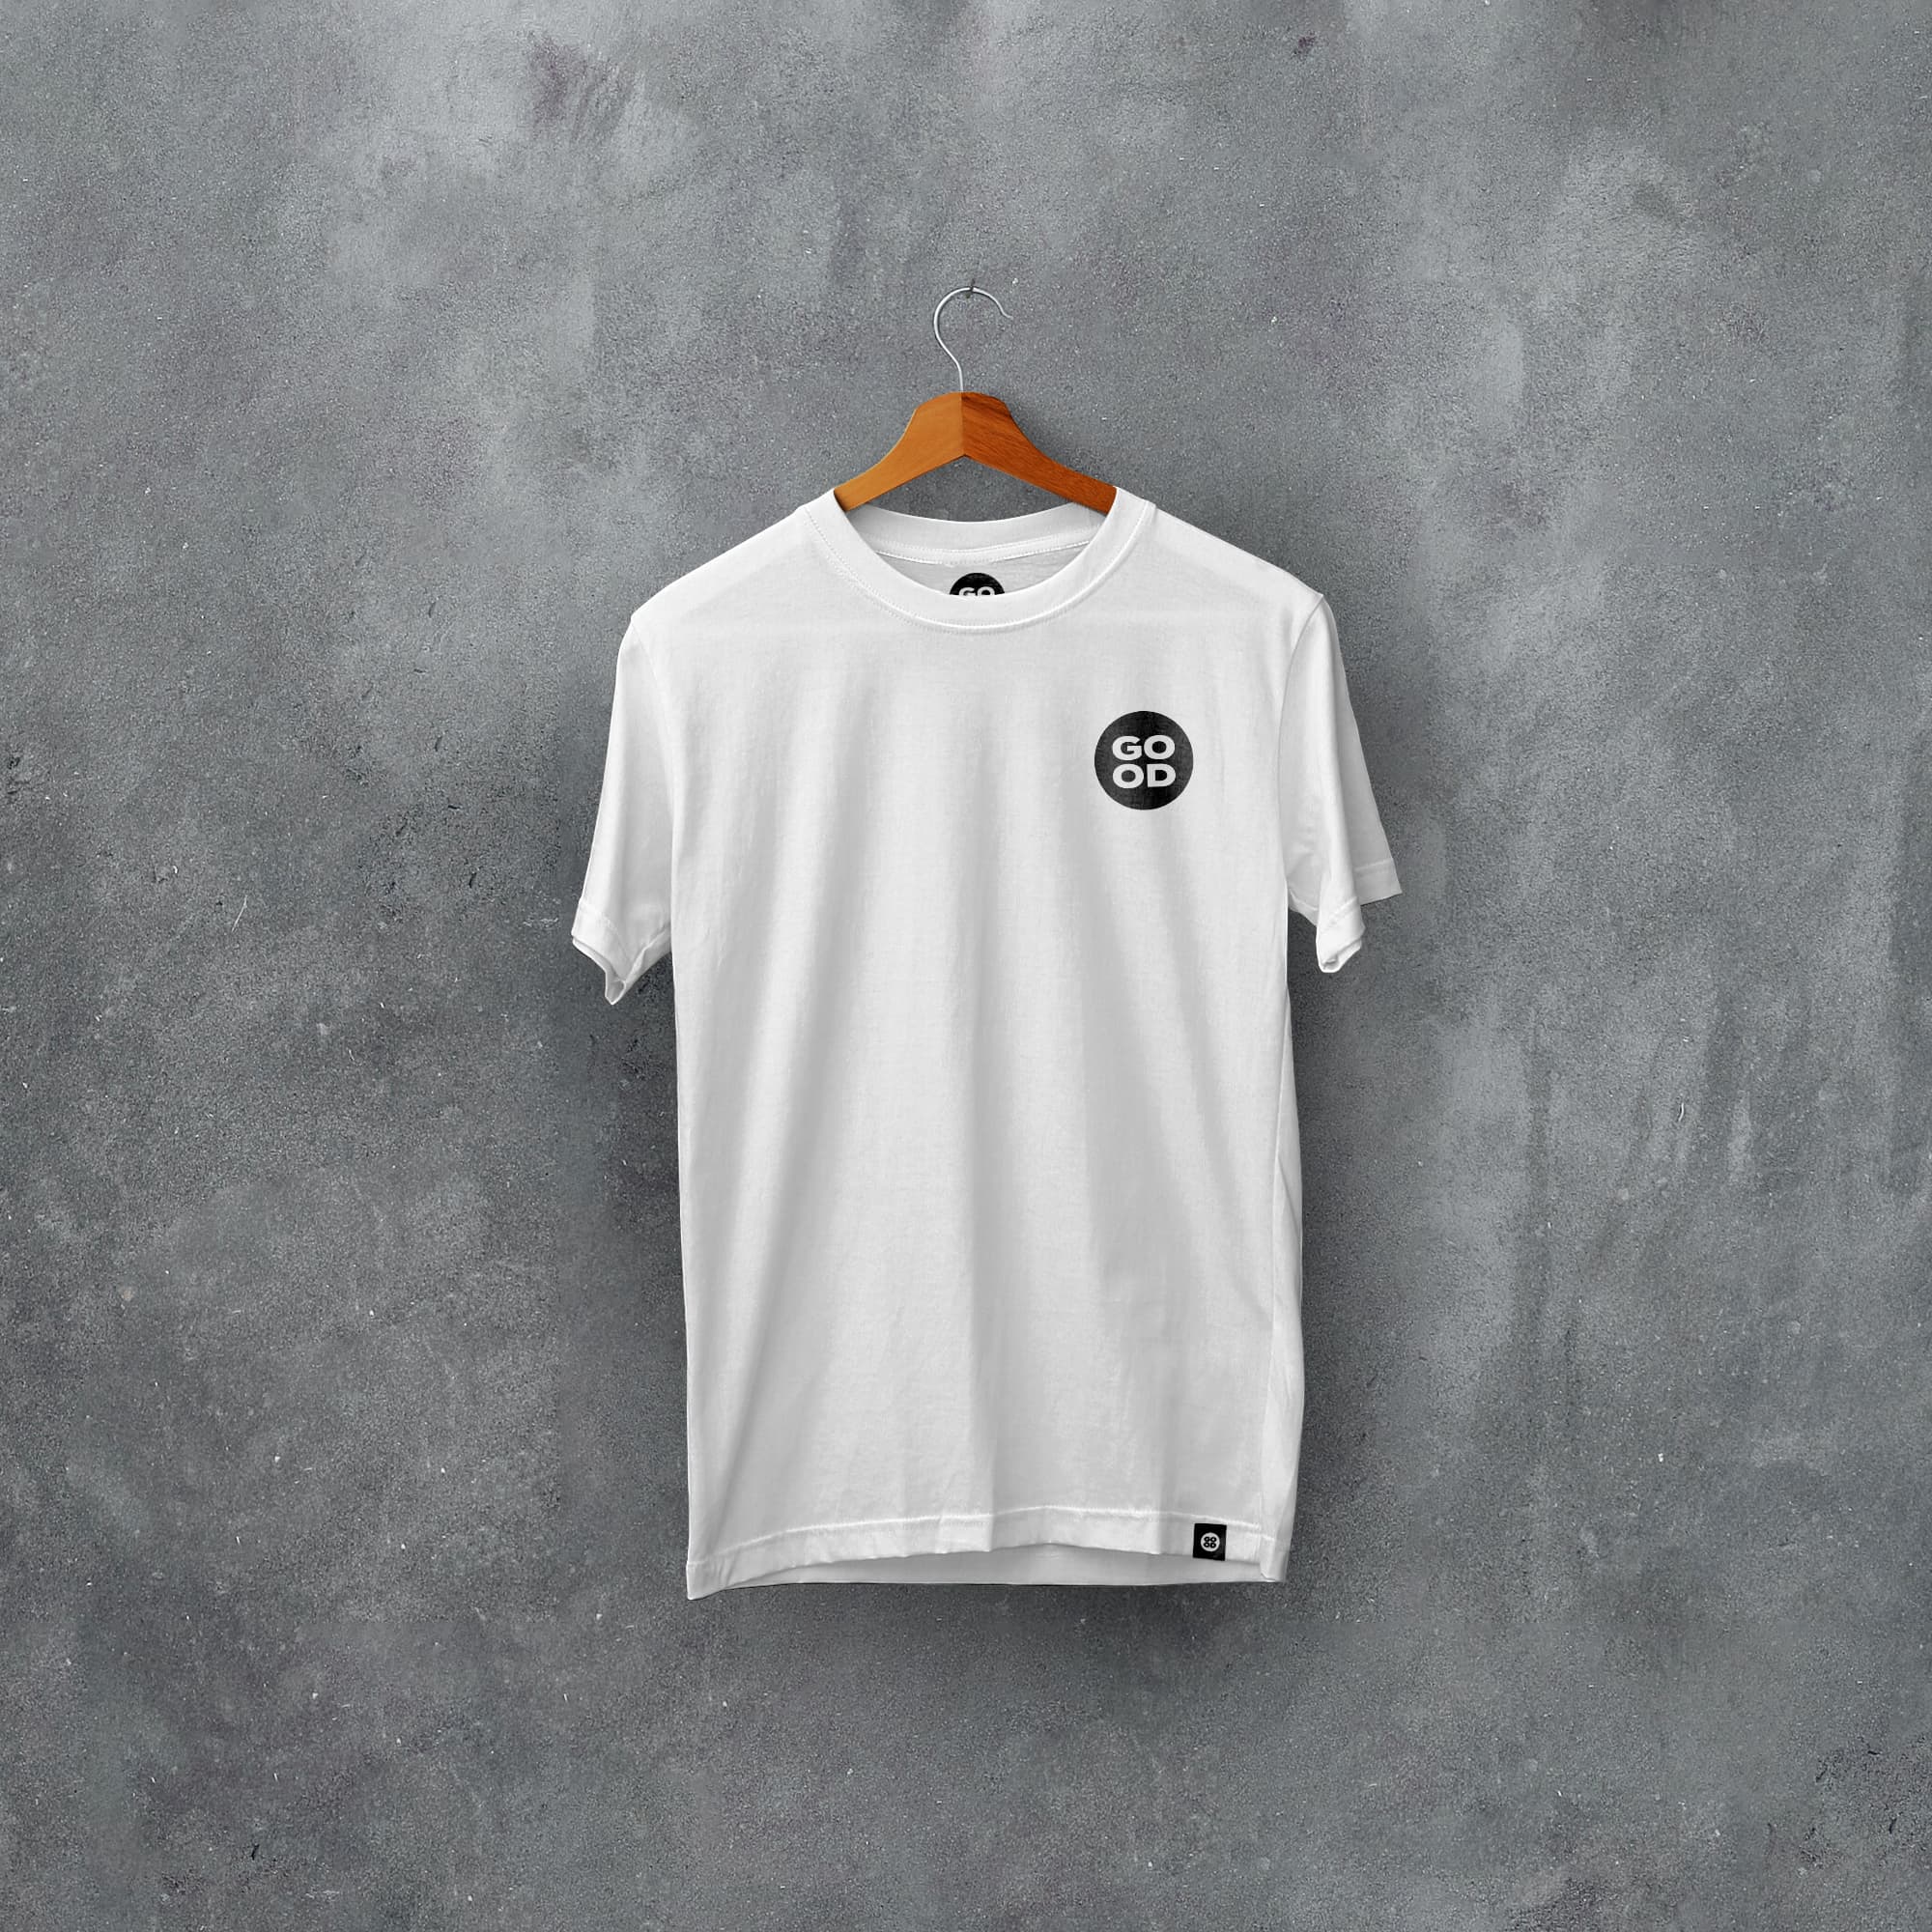 Dundee Utd Classic Kits Football T-Shirt